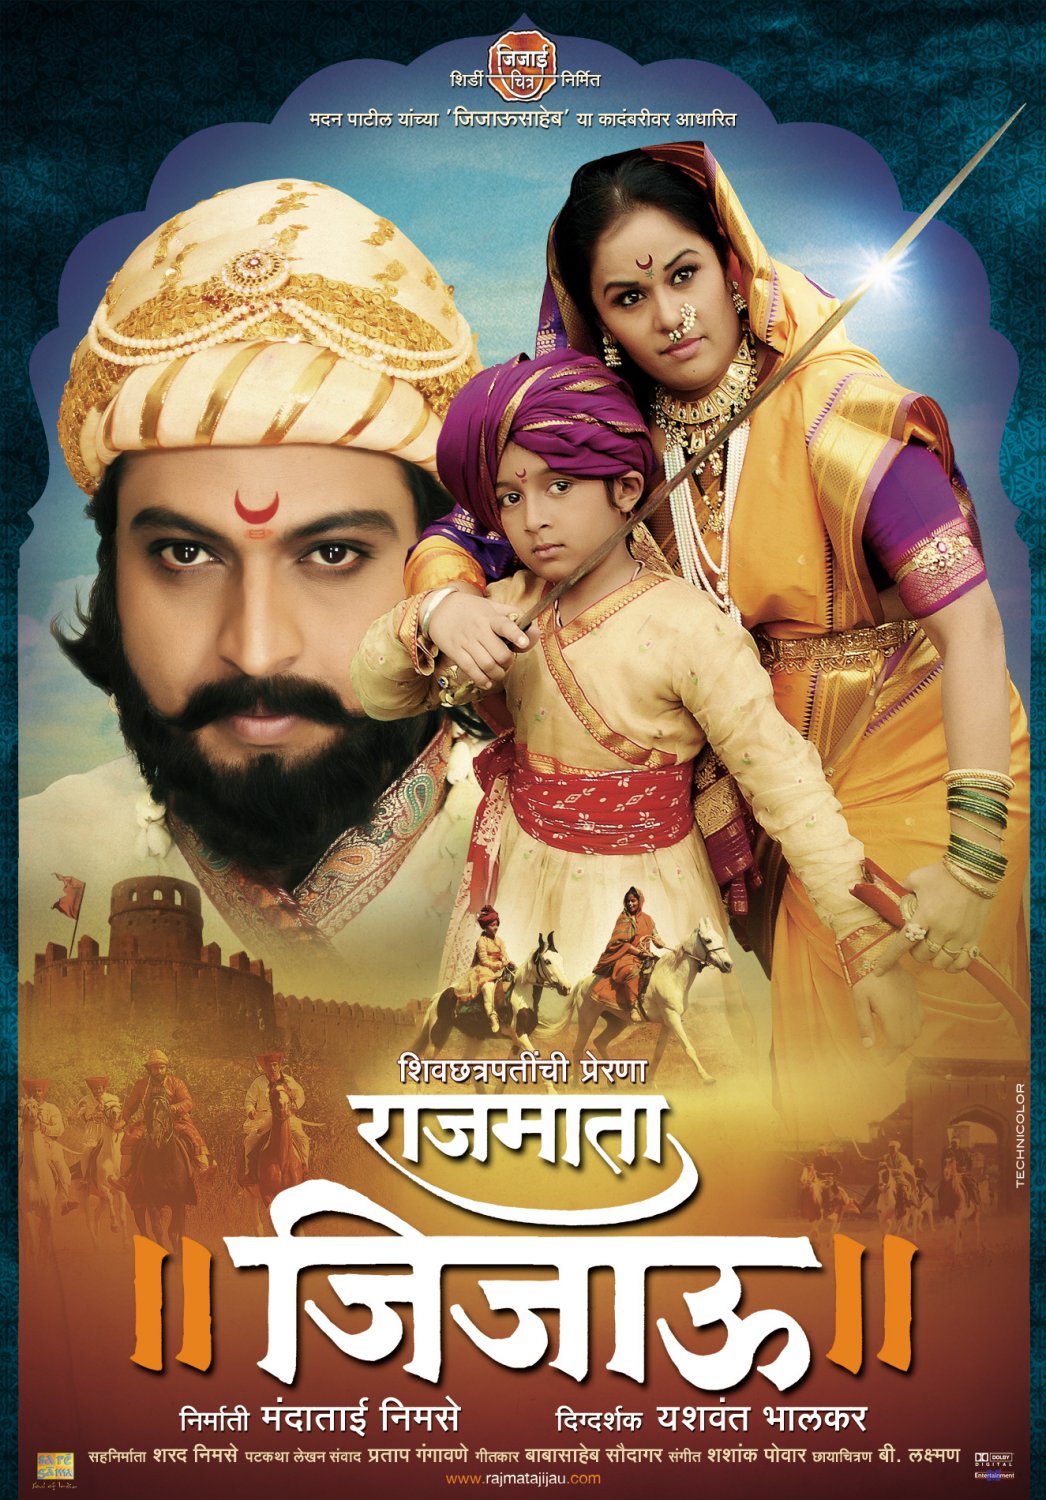 Extra Large Movie Poster Image for Rajmata Jijau (#2 of 5)